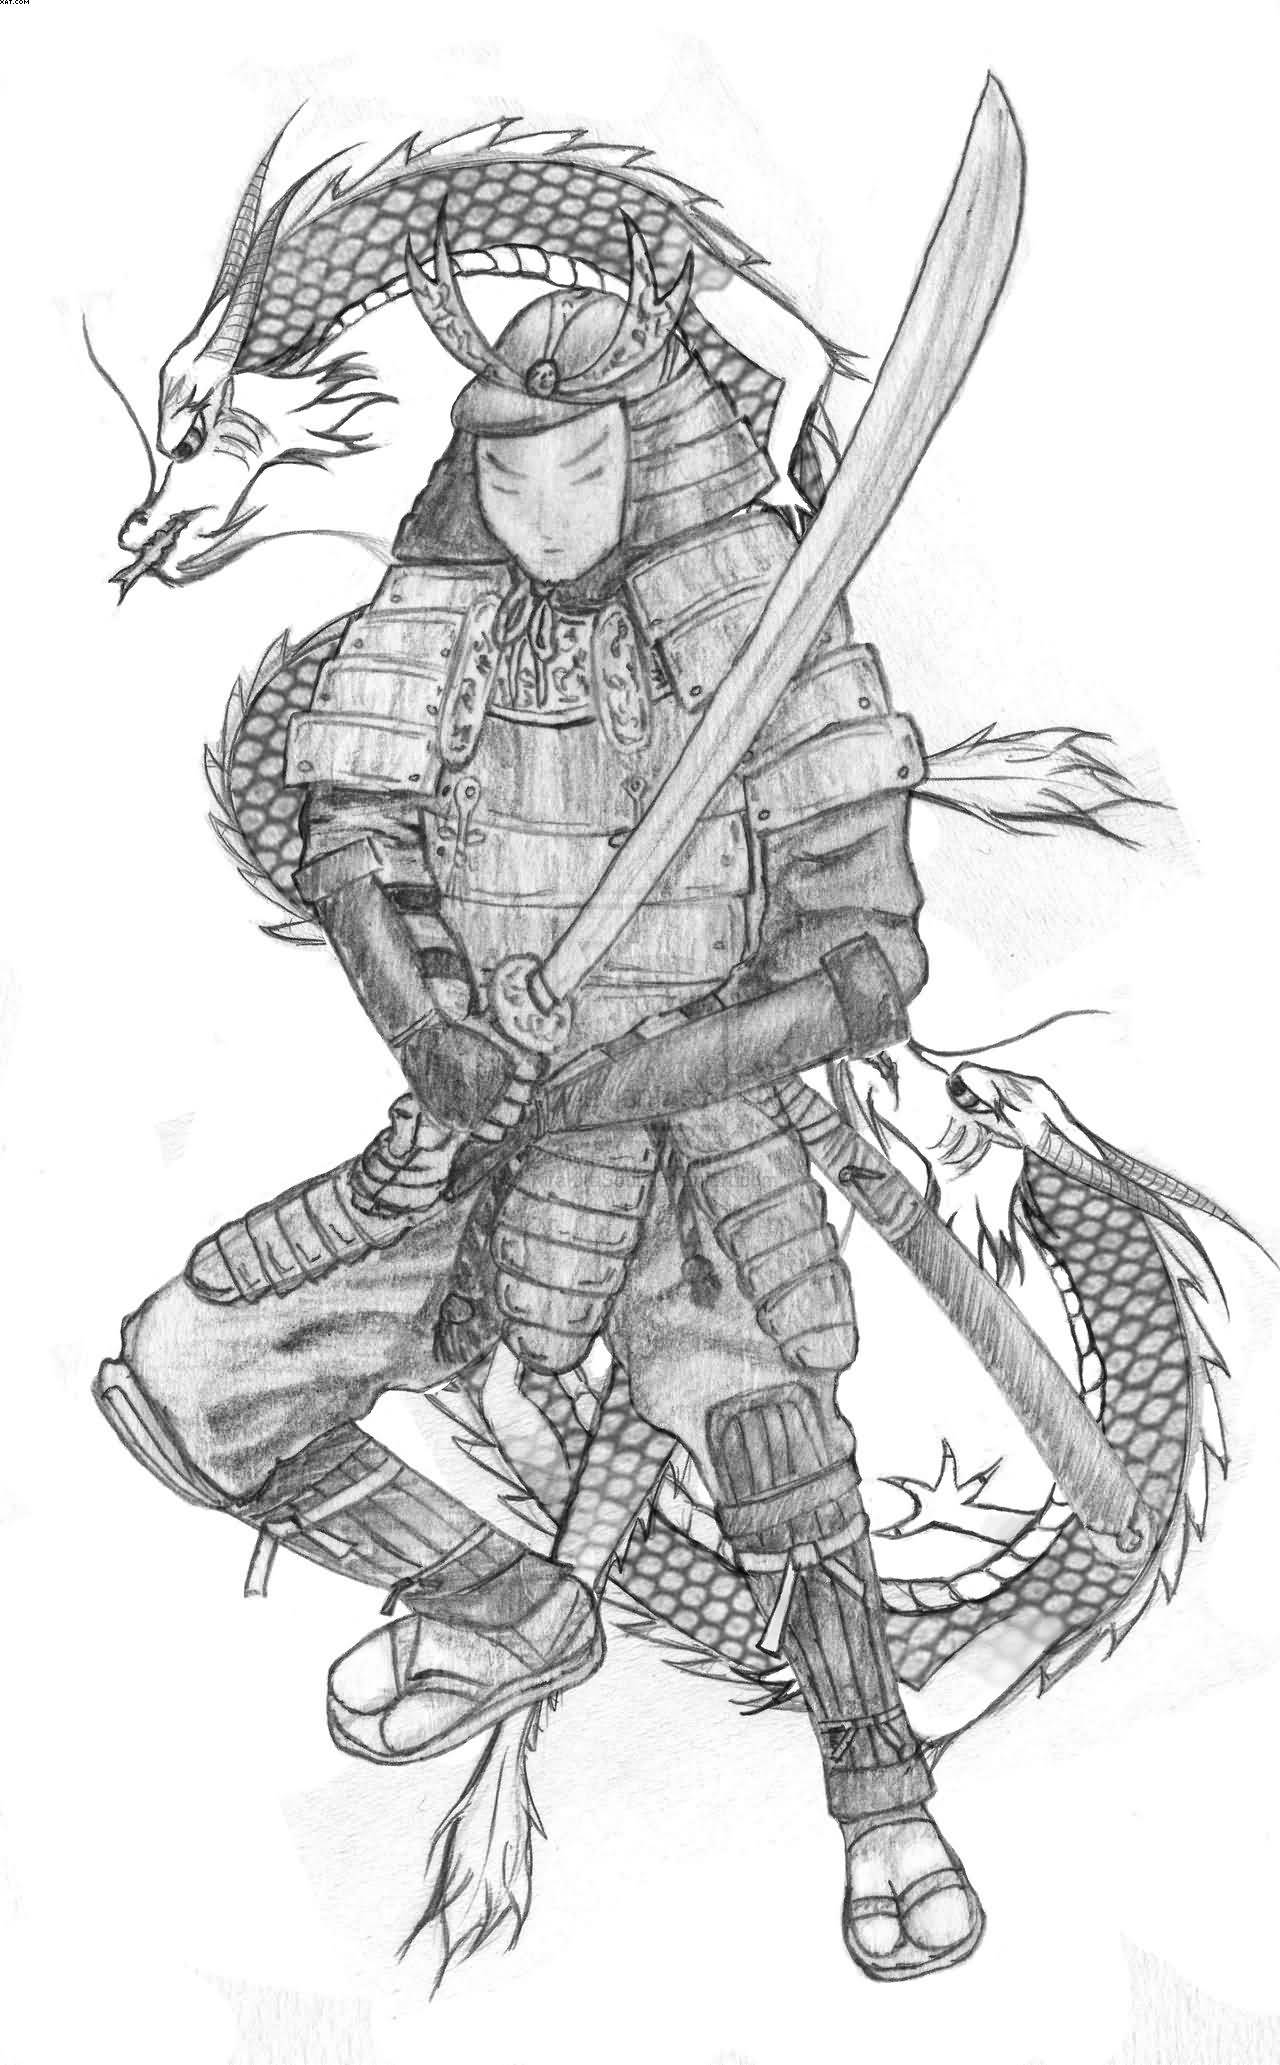 Classic Grey Ink Samurai With Dragon Tattoo Design By KiraKiraSoul